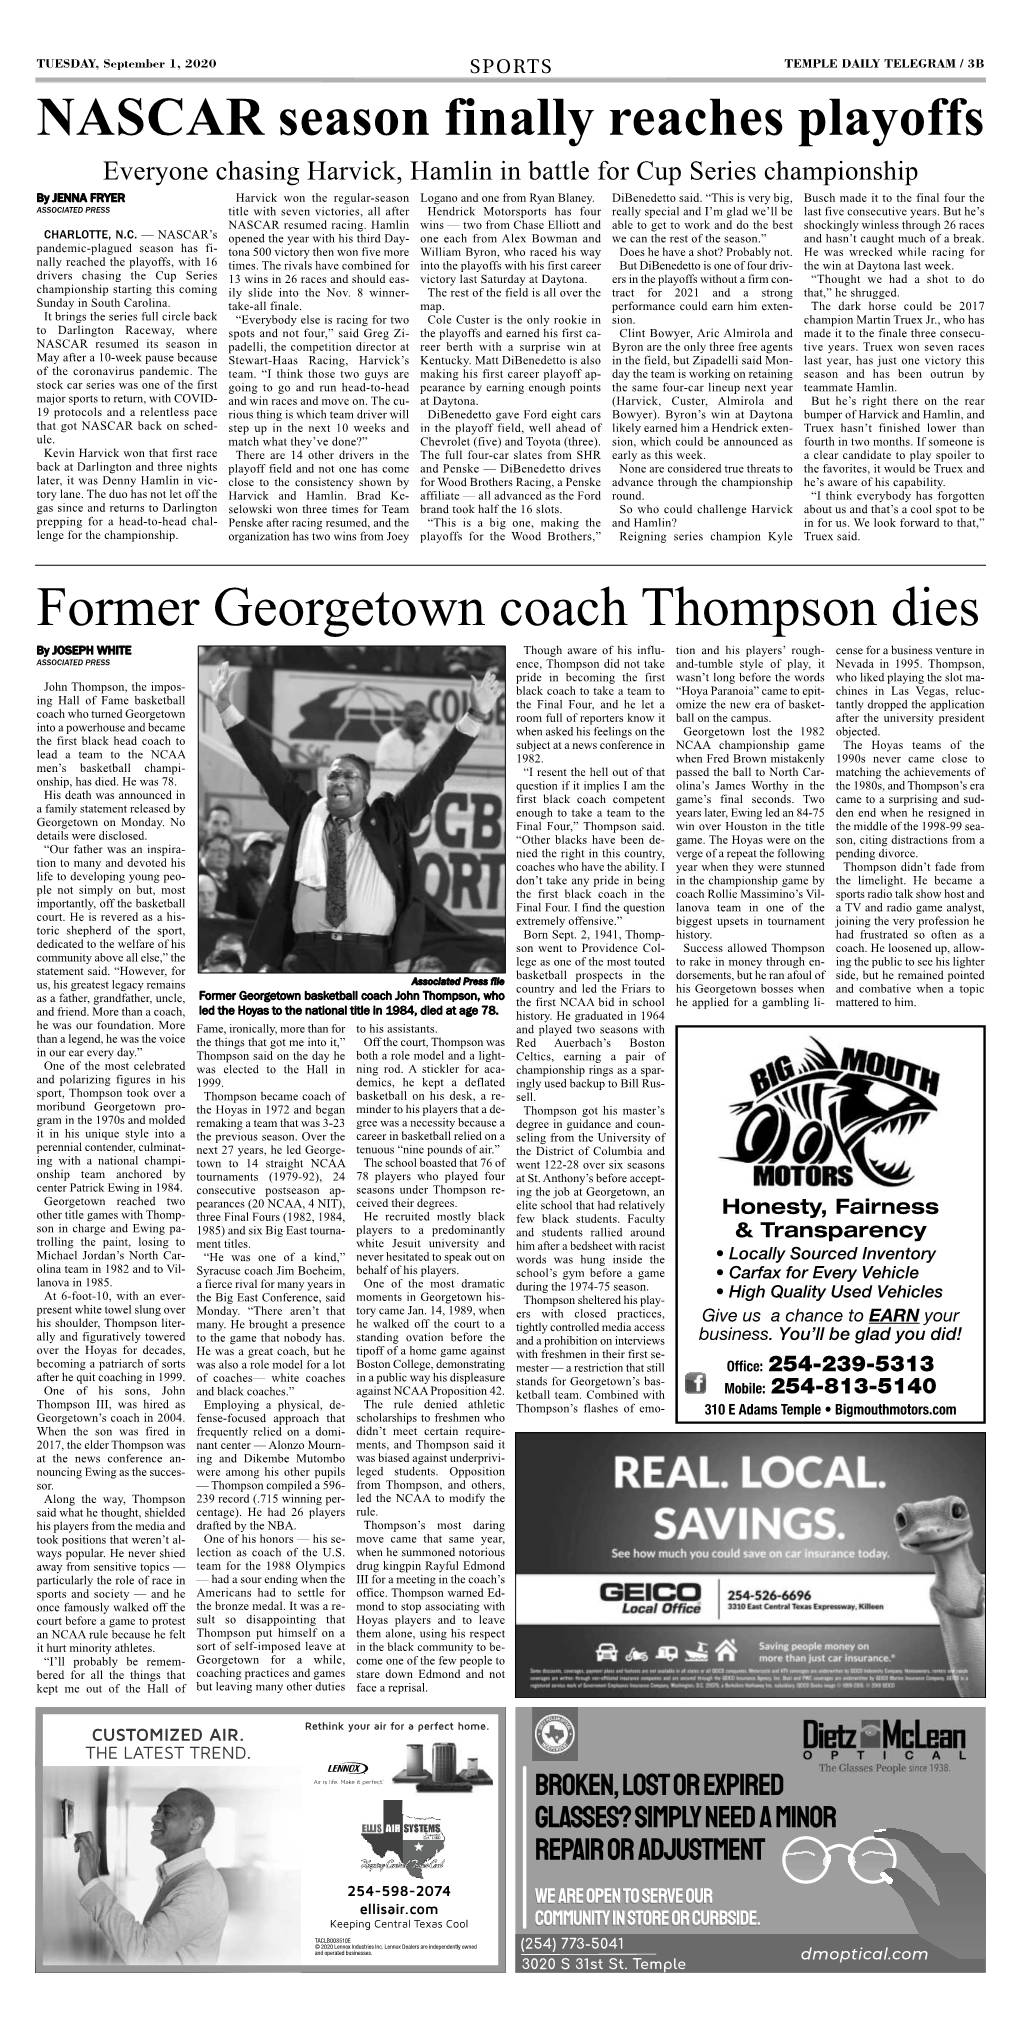 Former Georgetown Coach Thompson Dies